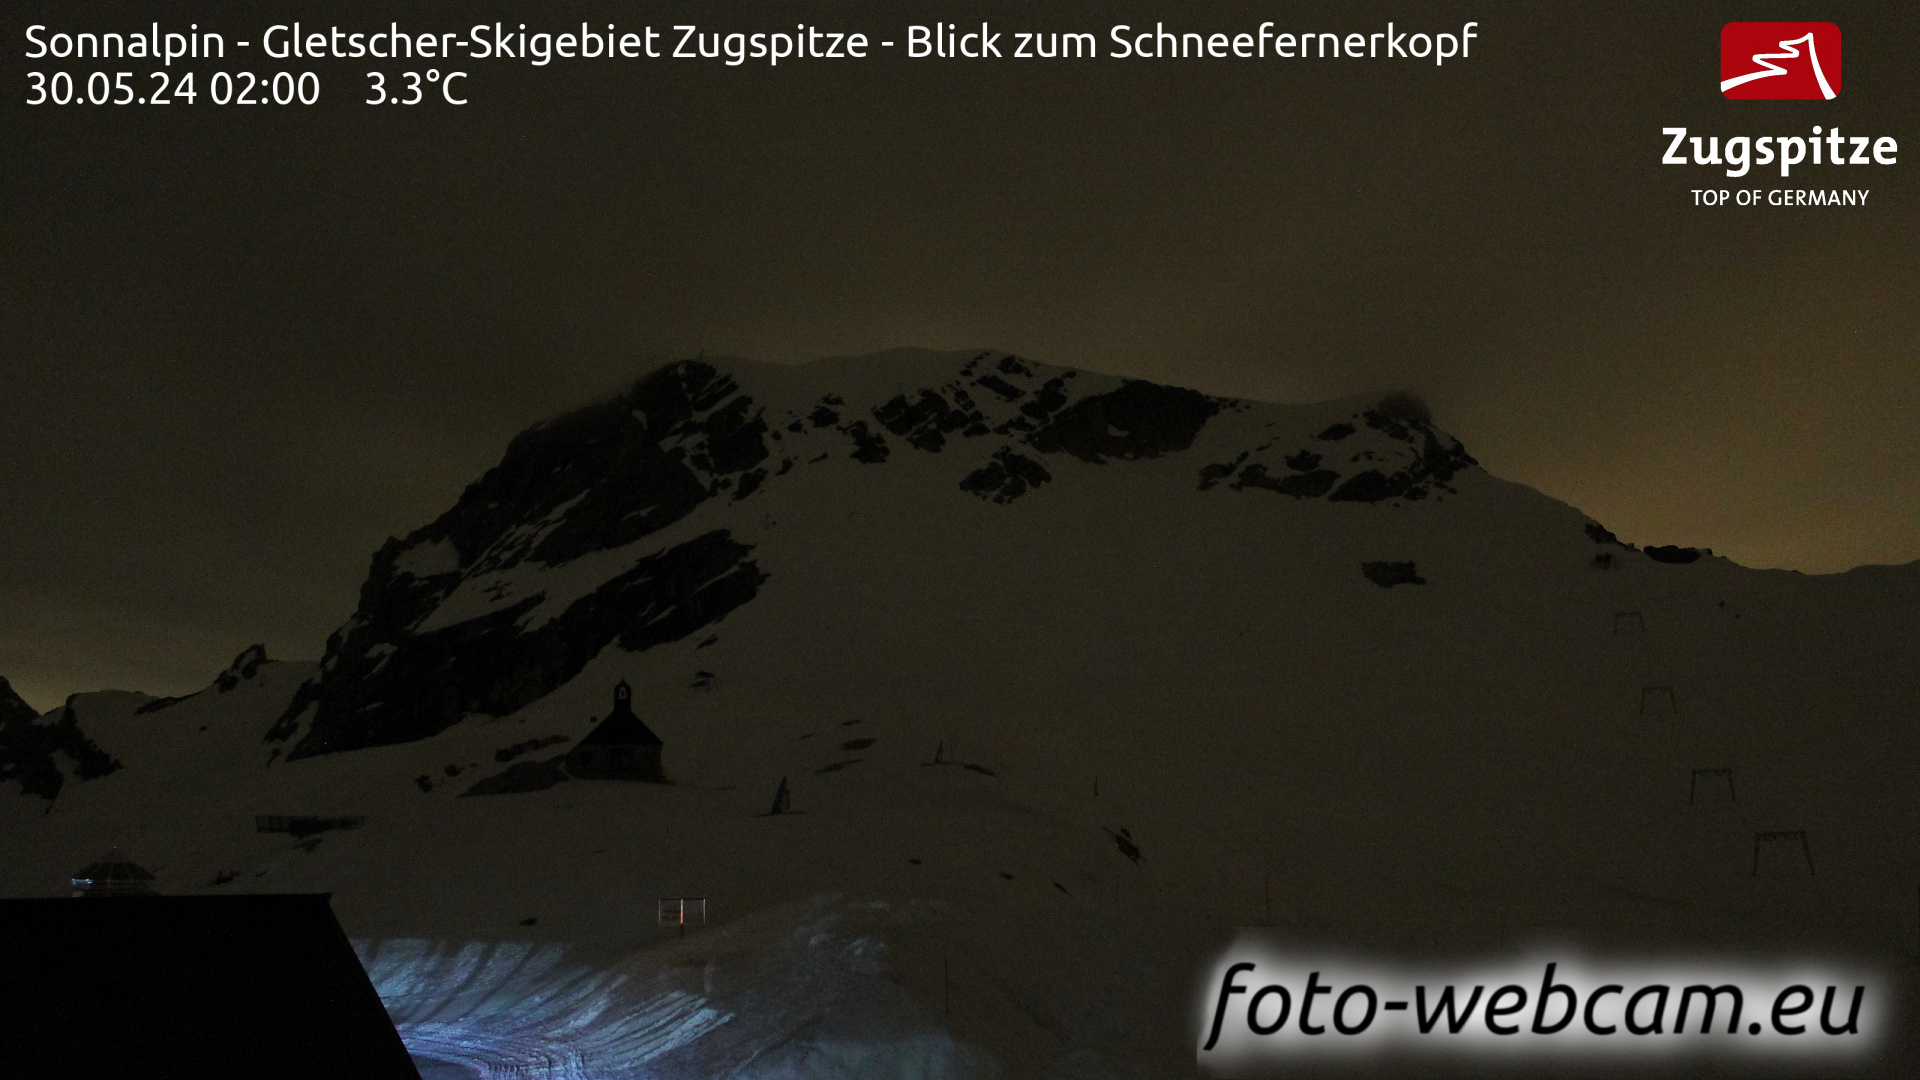 Zugspitze Lu. 02:24